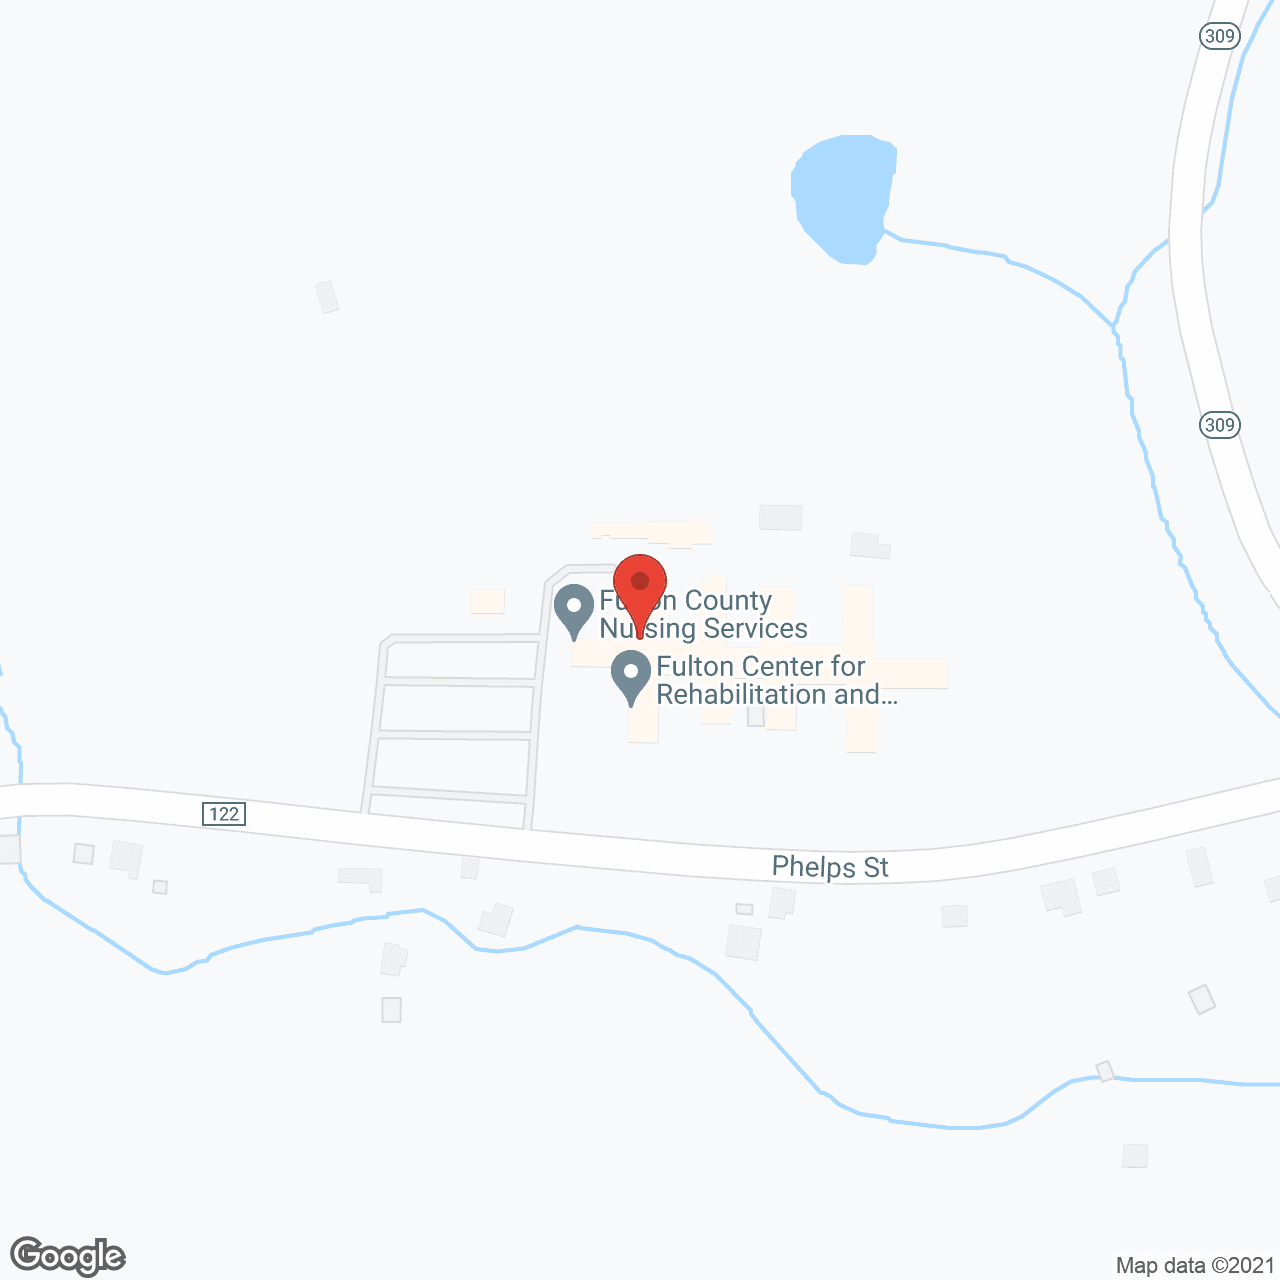 Fulton Center in google map